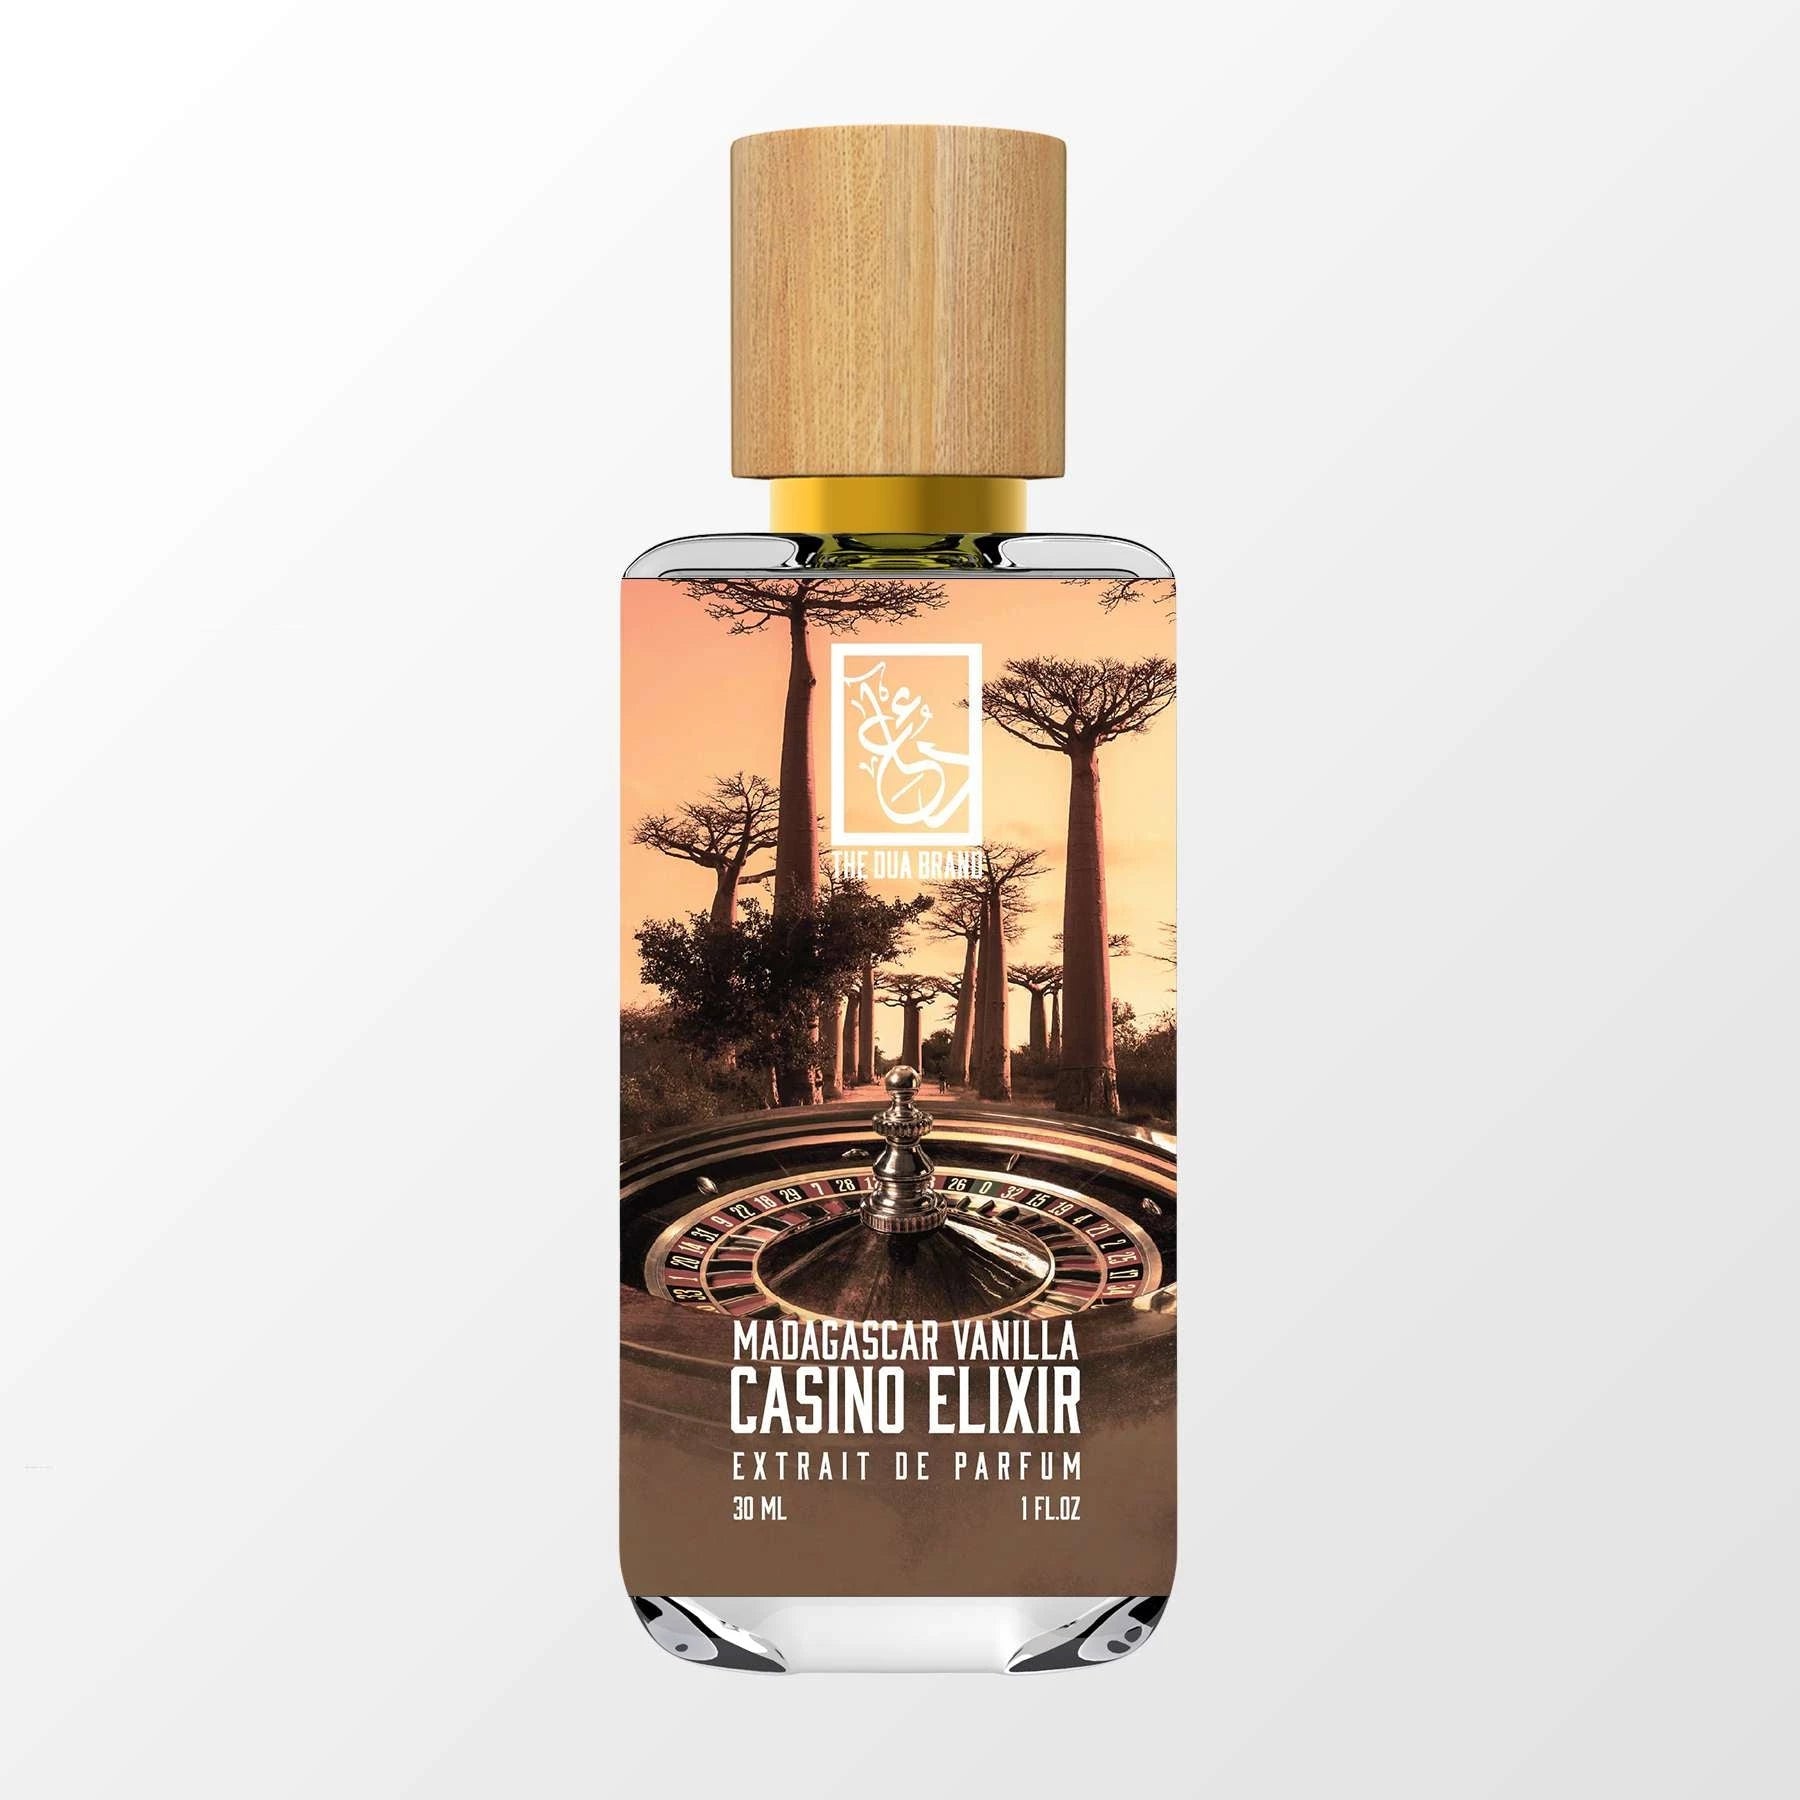 Madagascar Vanilla Casino Elixir - DUA FRAGRANCES - Oriental Fougere -  Unisex Perfume - 34ml/1.1 FL OZ - Extrait De Parfum